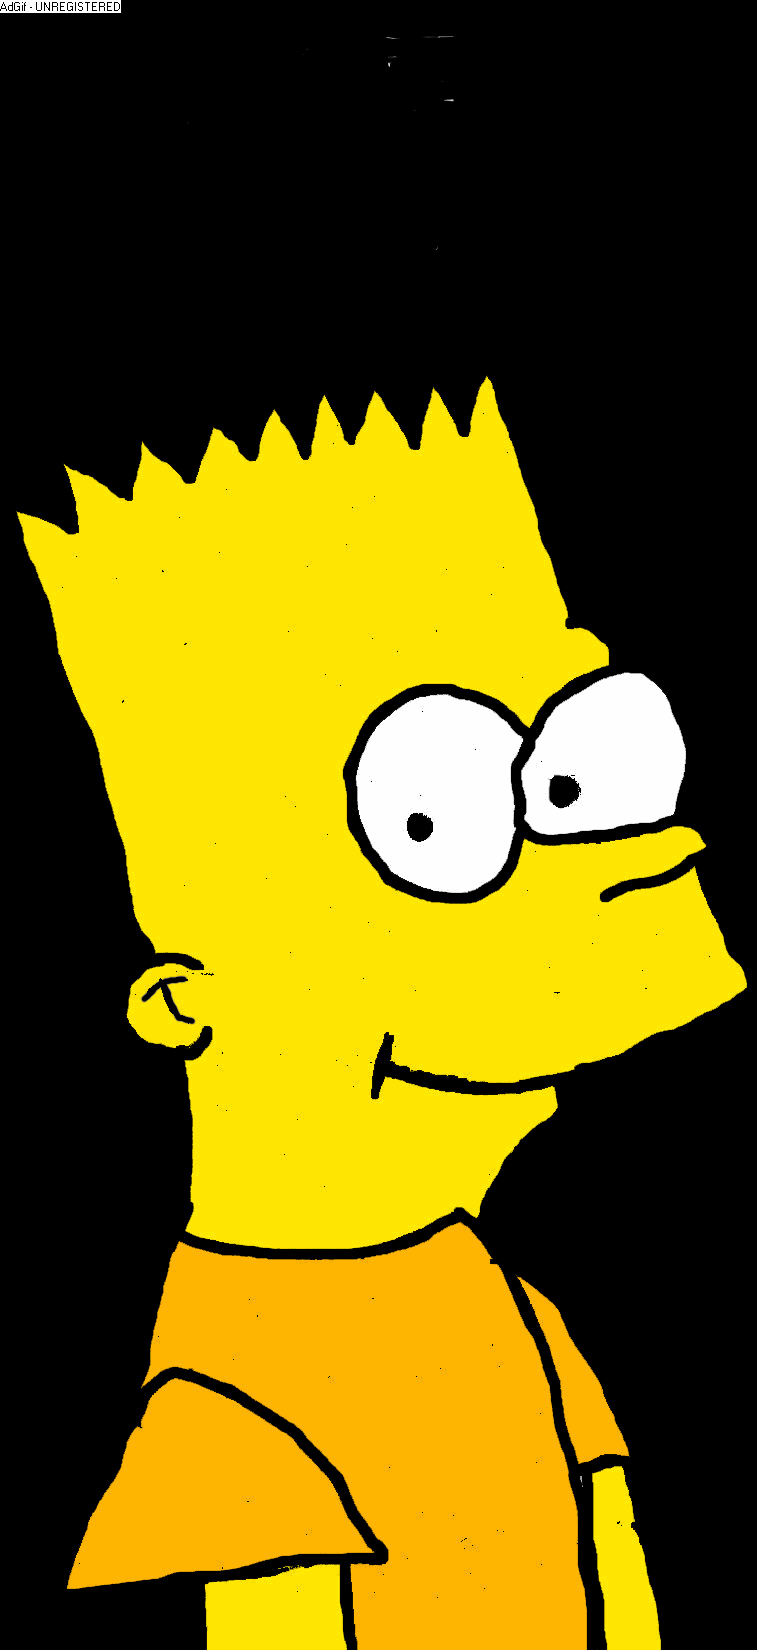 Bart (Animated) by Franktheicealchemist